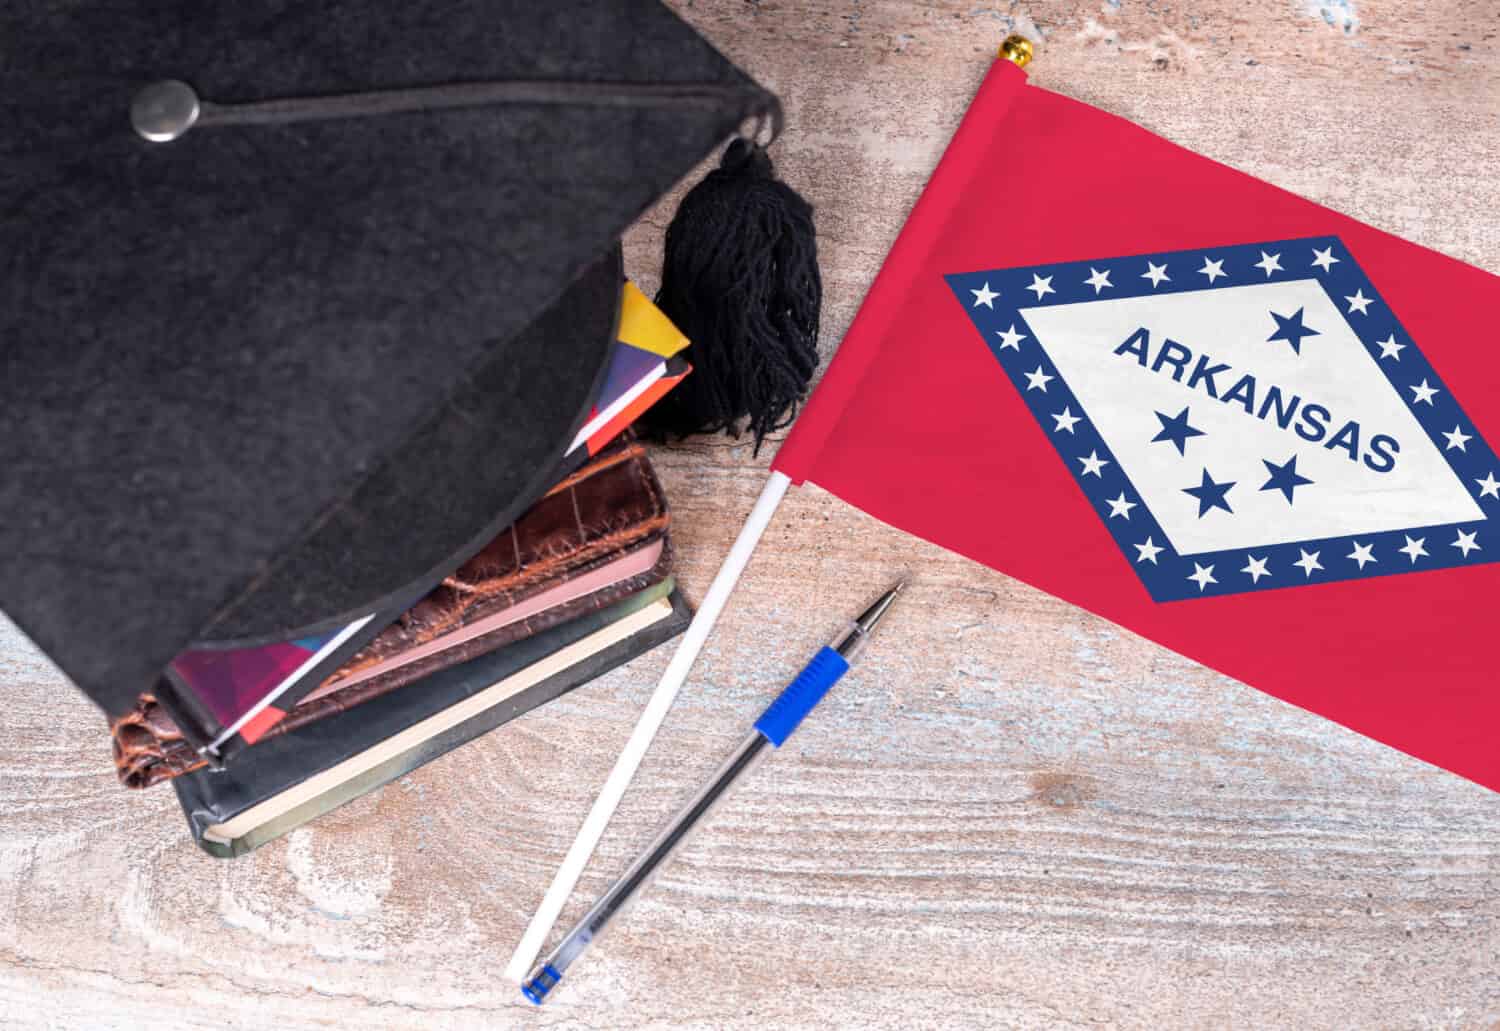 Black graduation hat on books next to Arkansas flag, education concept, top view